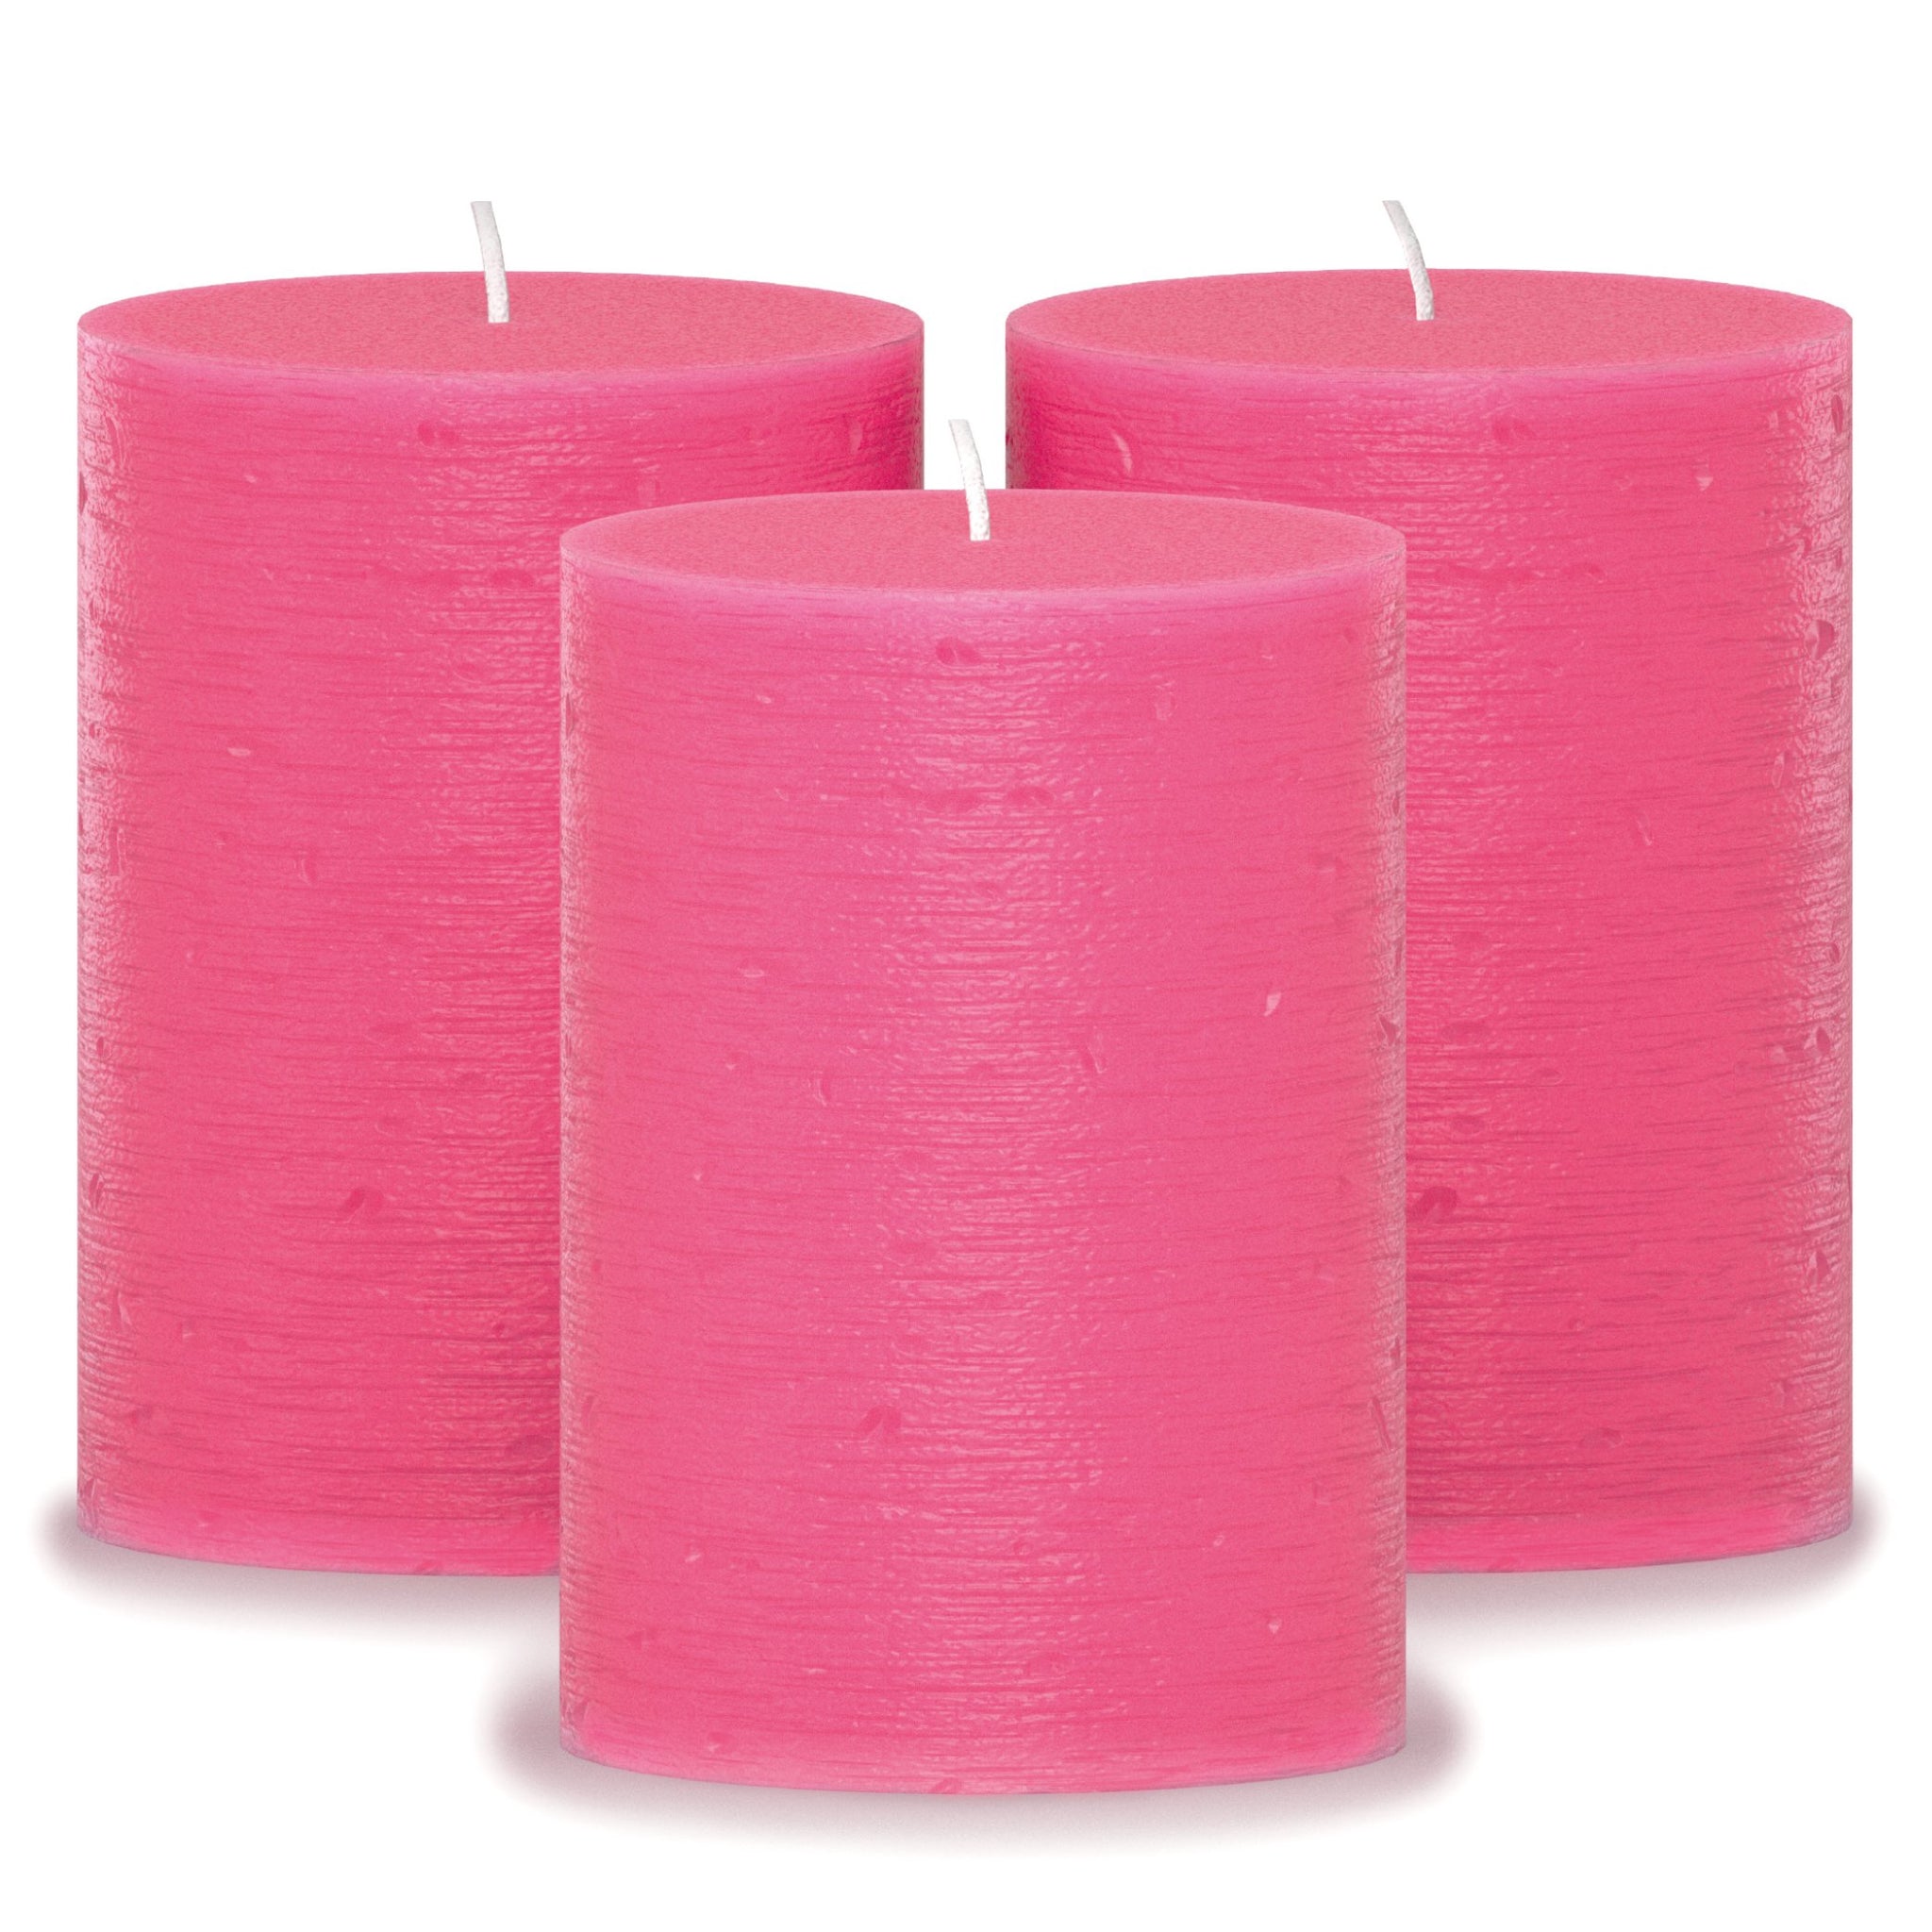 CANDWAX Pink Pillar Candles 4" - Set of 3pcs